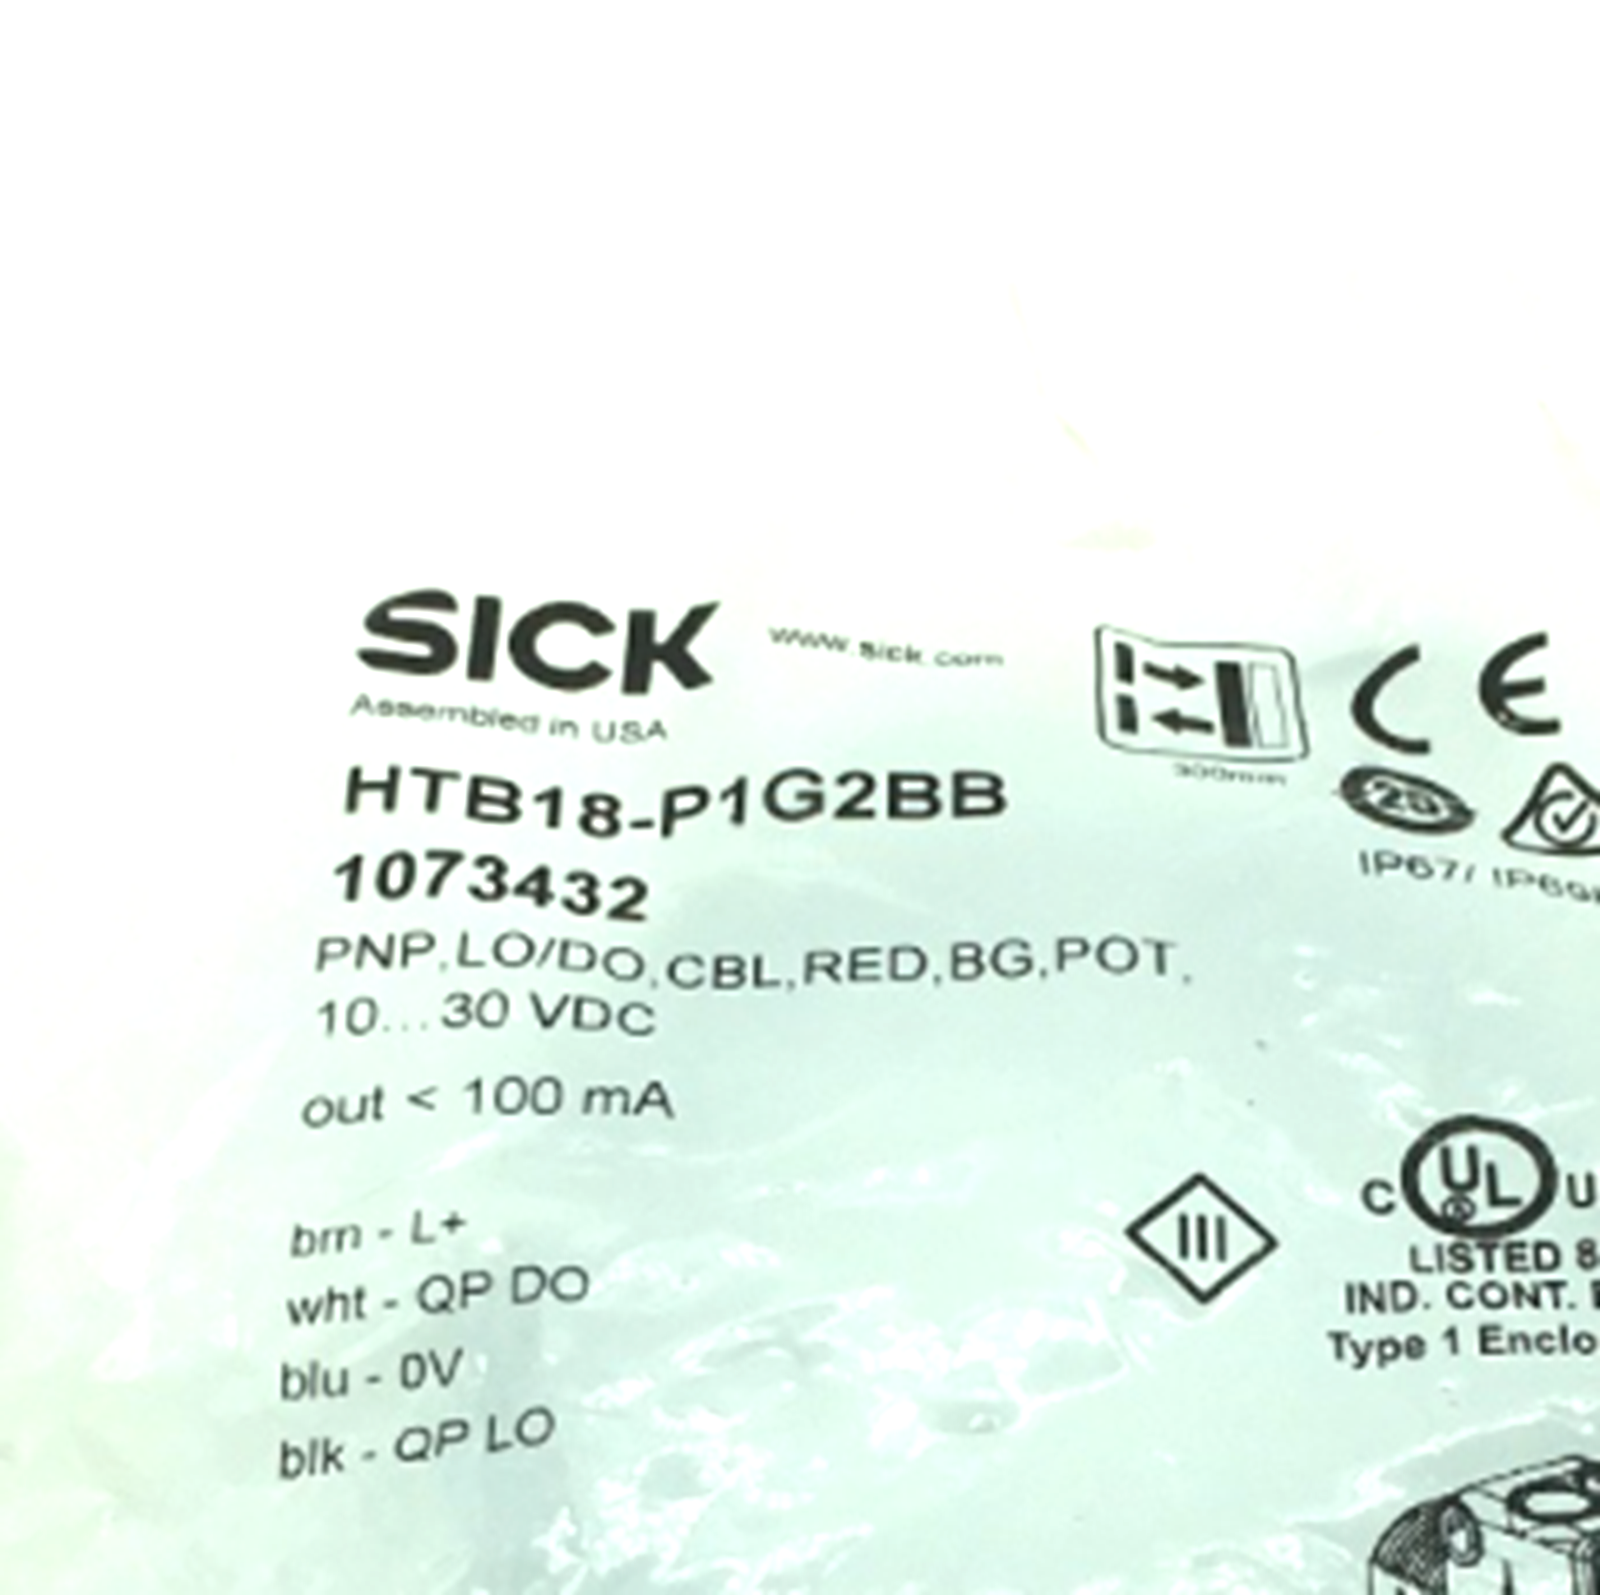 SICK HTB18-P1G2BB 1073432 Photoelectric Sensor